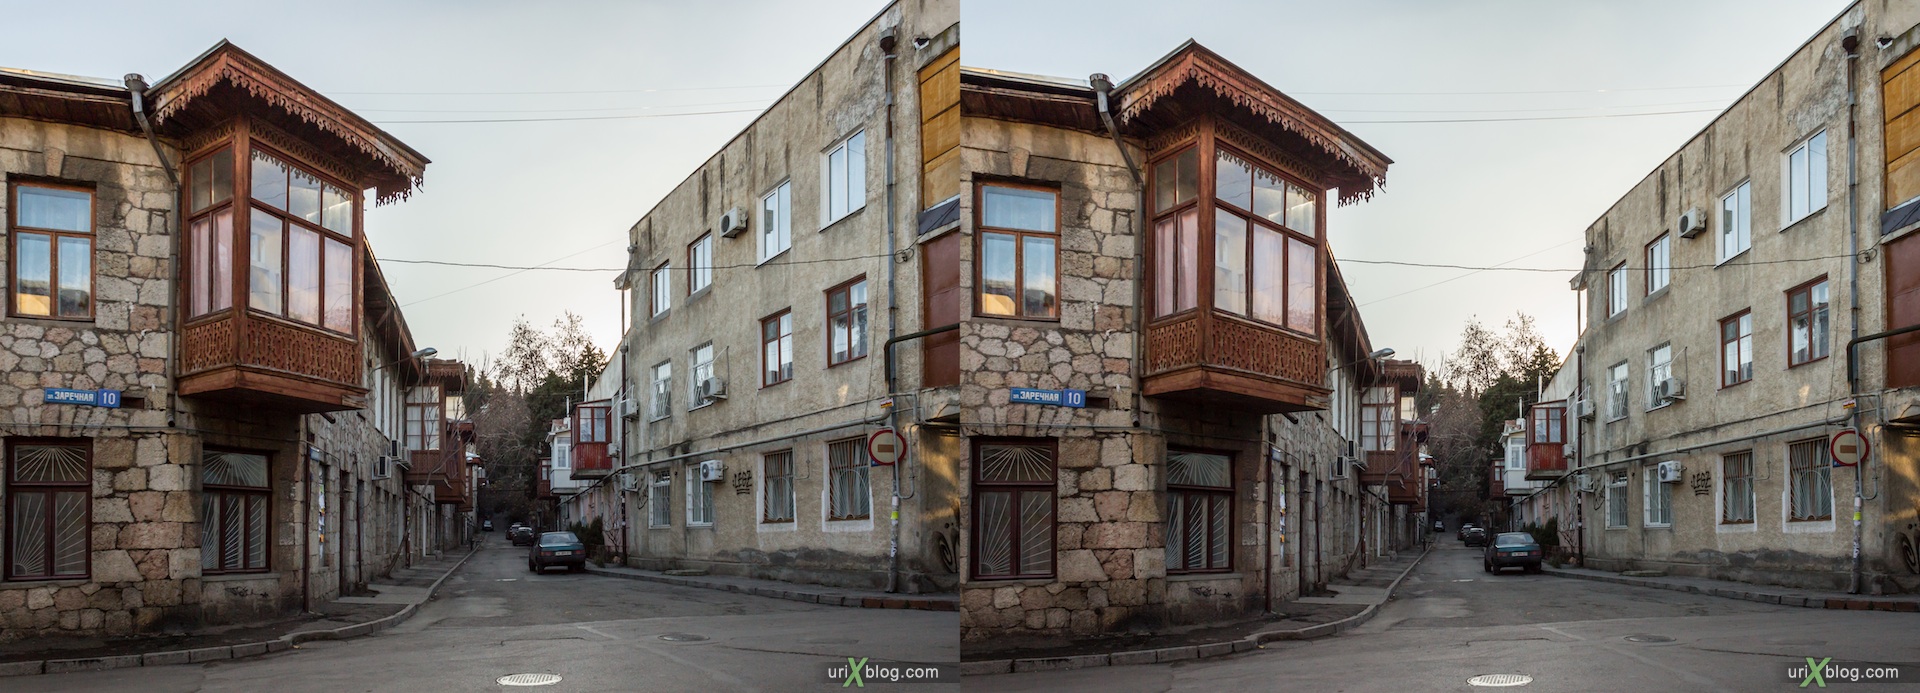 2012, Arkhivnaya street, Yalta, evening, coast city, Crimea, Ukraine, 3D, stereo pair, cross-eyed, crossview, cross view stereo pair, stereoscopic